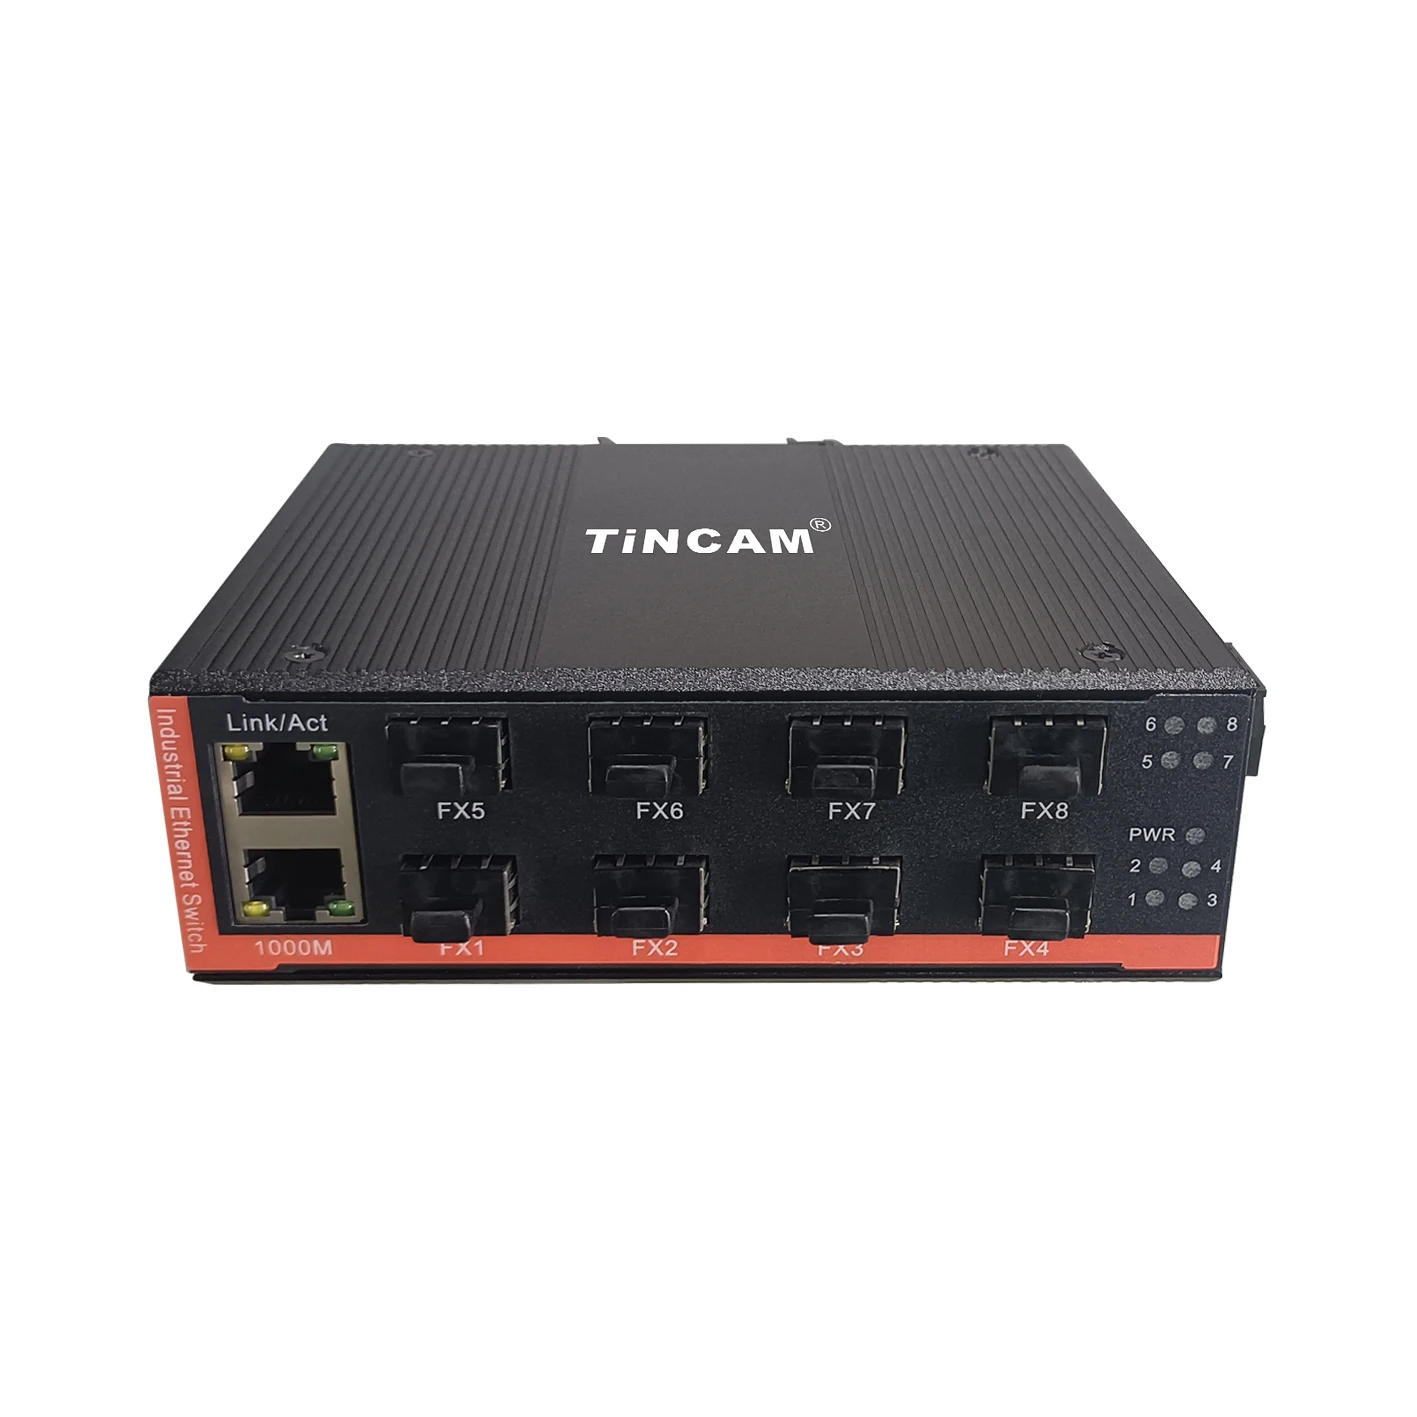 whitetown mdb access to csv converter TiNCAM Gigabit 10Port Access 8*SFP+2*RJ45 Industrial Network Switch Aggregation Industrial Media Converter